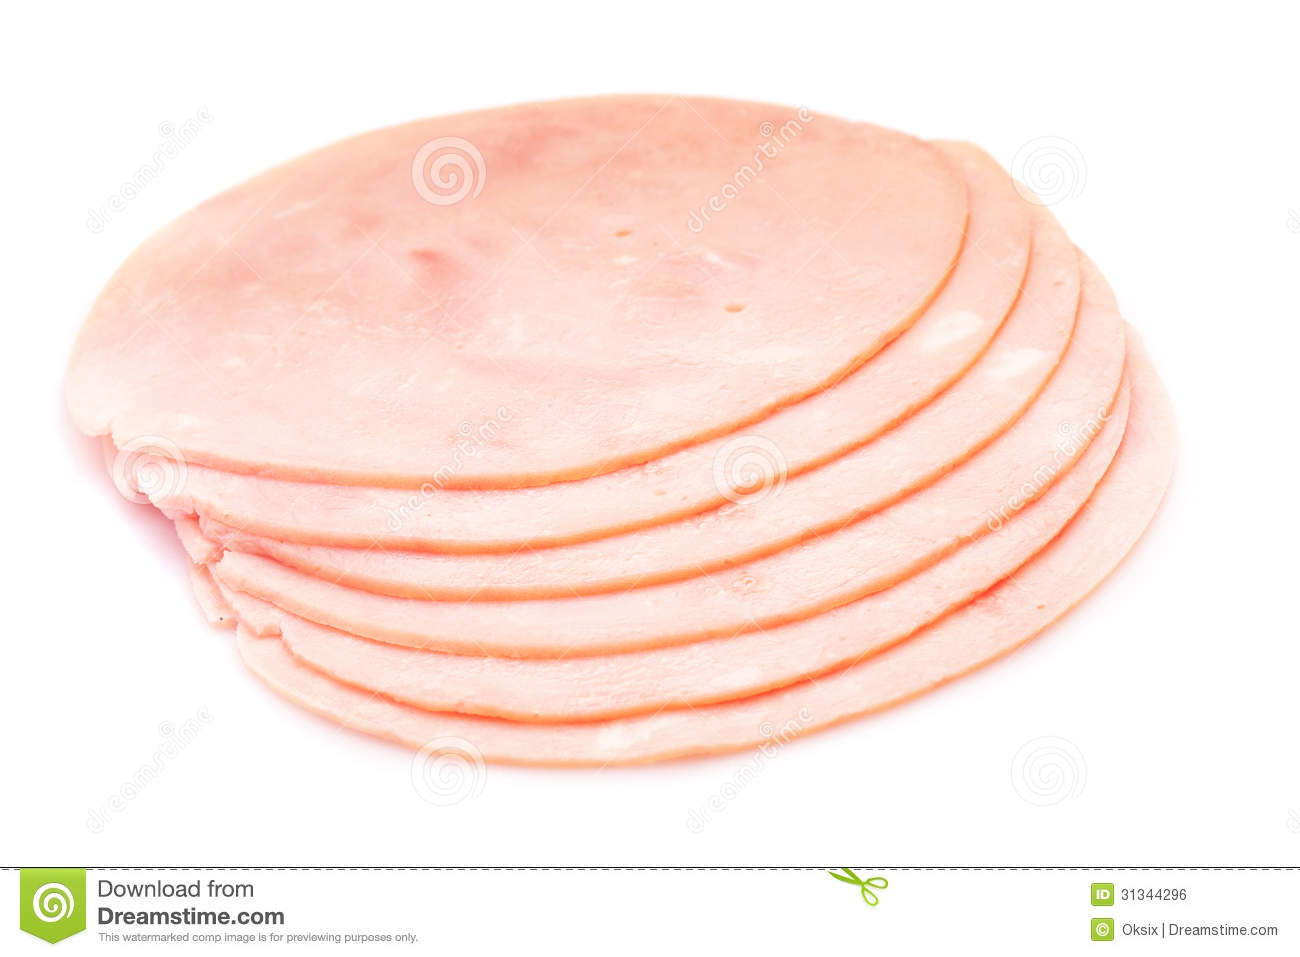 Ham Slices Royalty Free Stock Image   Image  31344296